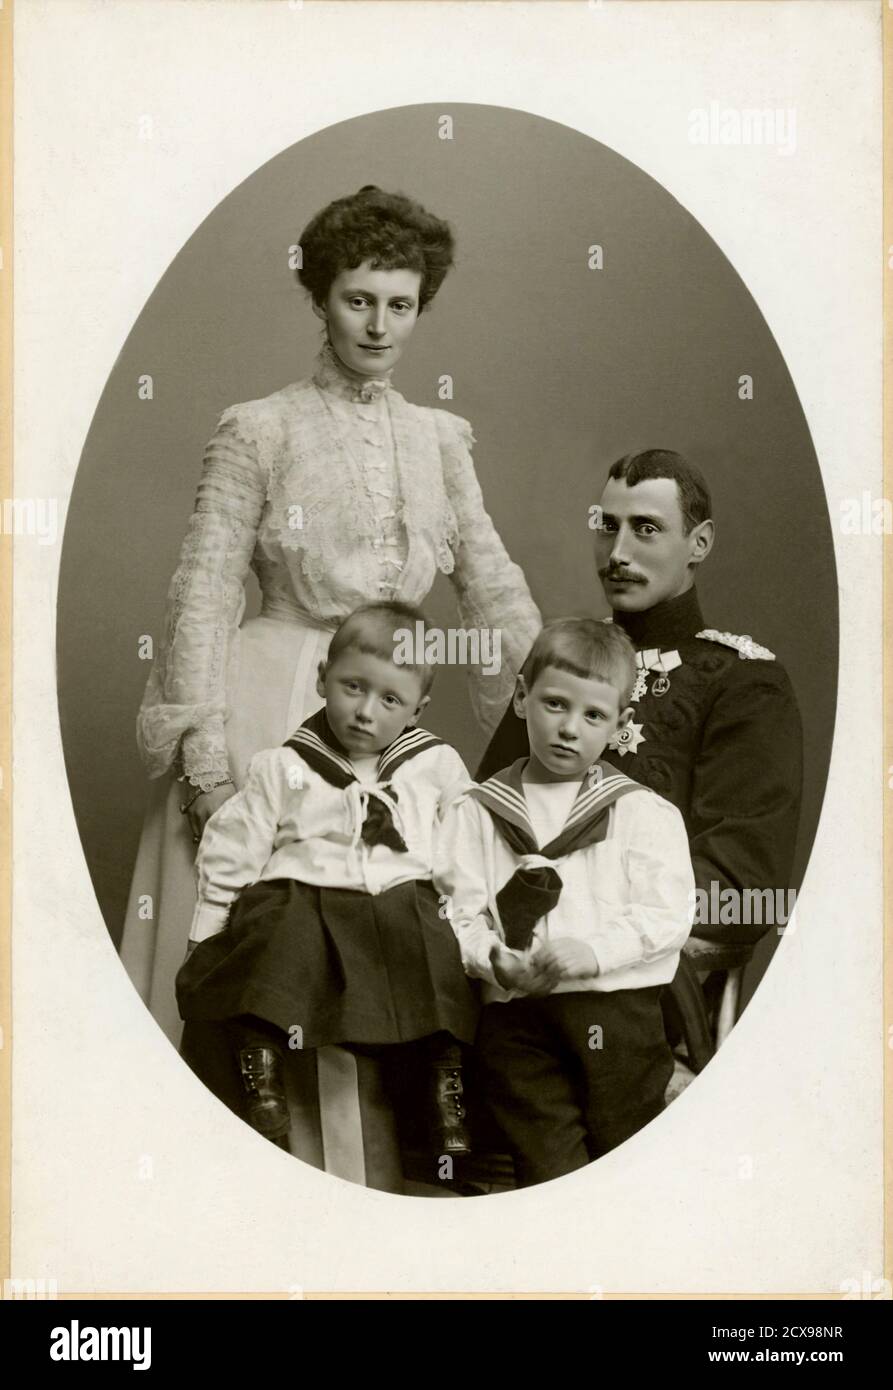 1903 c., Kopenhagen , DENMARK : The future King of Denmark CHRISTIAN X ( 1870 - 1947 , King from 1912 ) with wife future Queen ALEXANDRINE of Mecklenburg-Schwerin ( 1879 - 1952 ) and sons: the future King FREDERICK IX ( 1899 - 1972 ) and prince KNUD ( 1900 - 1976 ) . Photo by Carl Sonne , Copenhagen . Christian was the son of King Frederick VIII ( 1843 - 1912 ) and Louise of Sweden ( of Bernadotte , 1851 - 1926) . -  House of Glücksburg - GLUCKSBURG - DANIMARCA - FRIEDRICH - FOTO STORICHE - HISTORY - danish royalty - nobili - nobiltà danese - portrait - ritratto - baffi - moustache - collar - Stock Photo